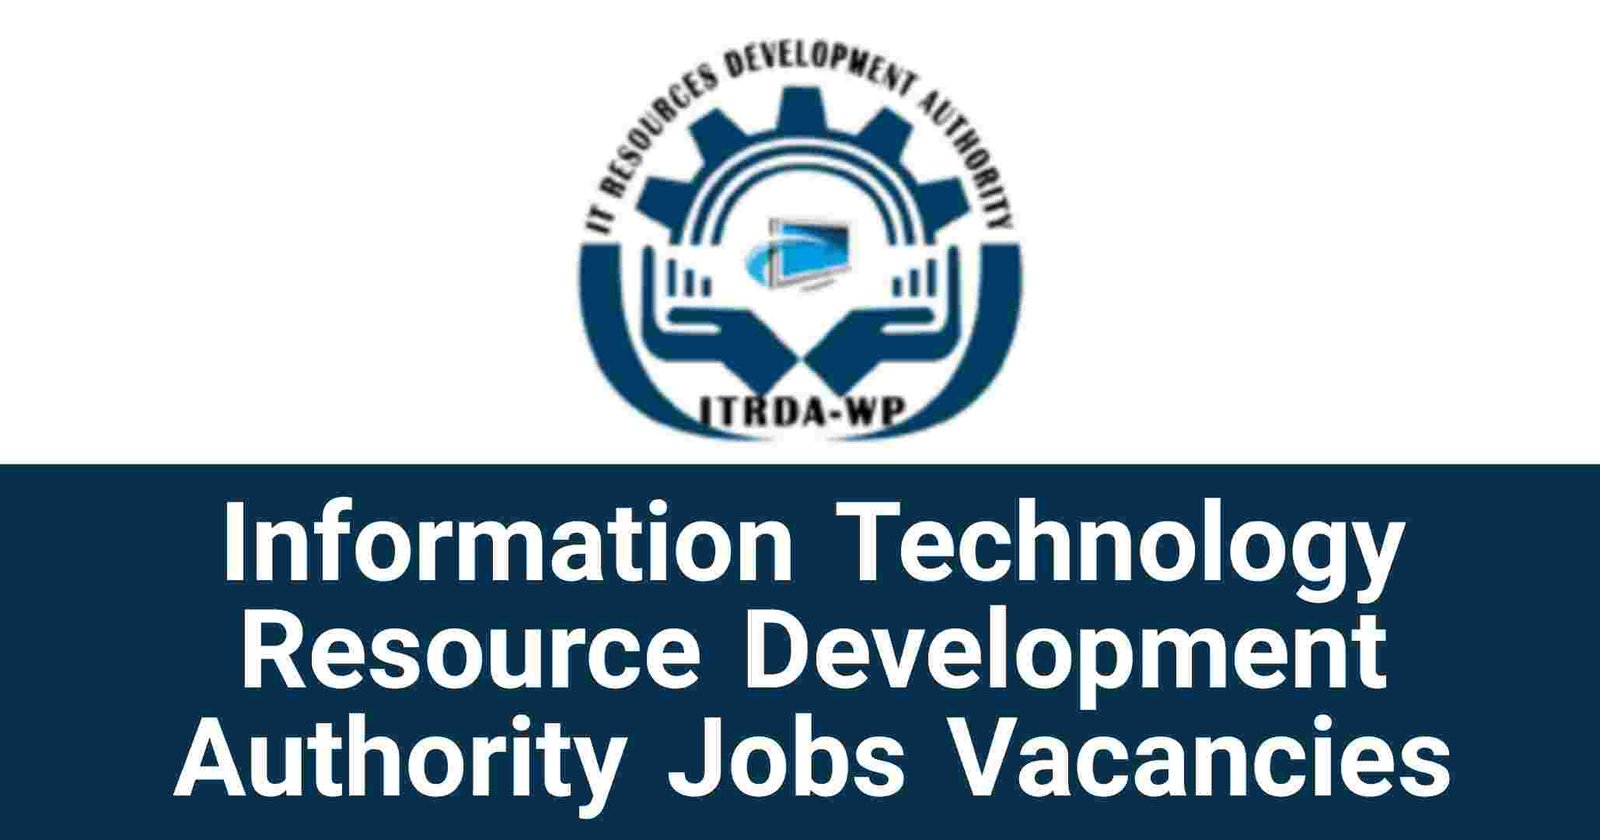 Information Technology Resource Development Authority Jobs Vacancies